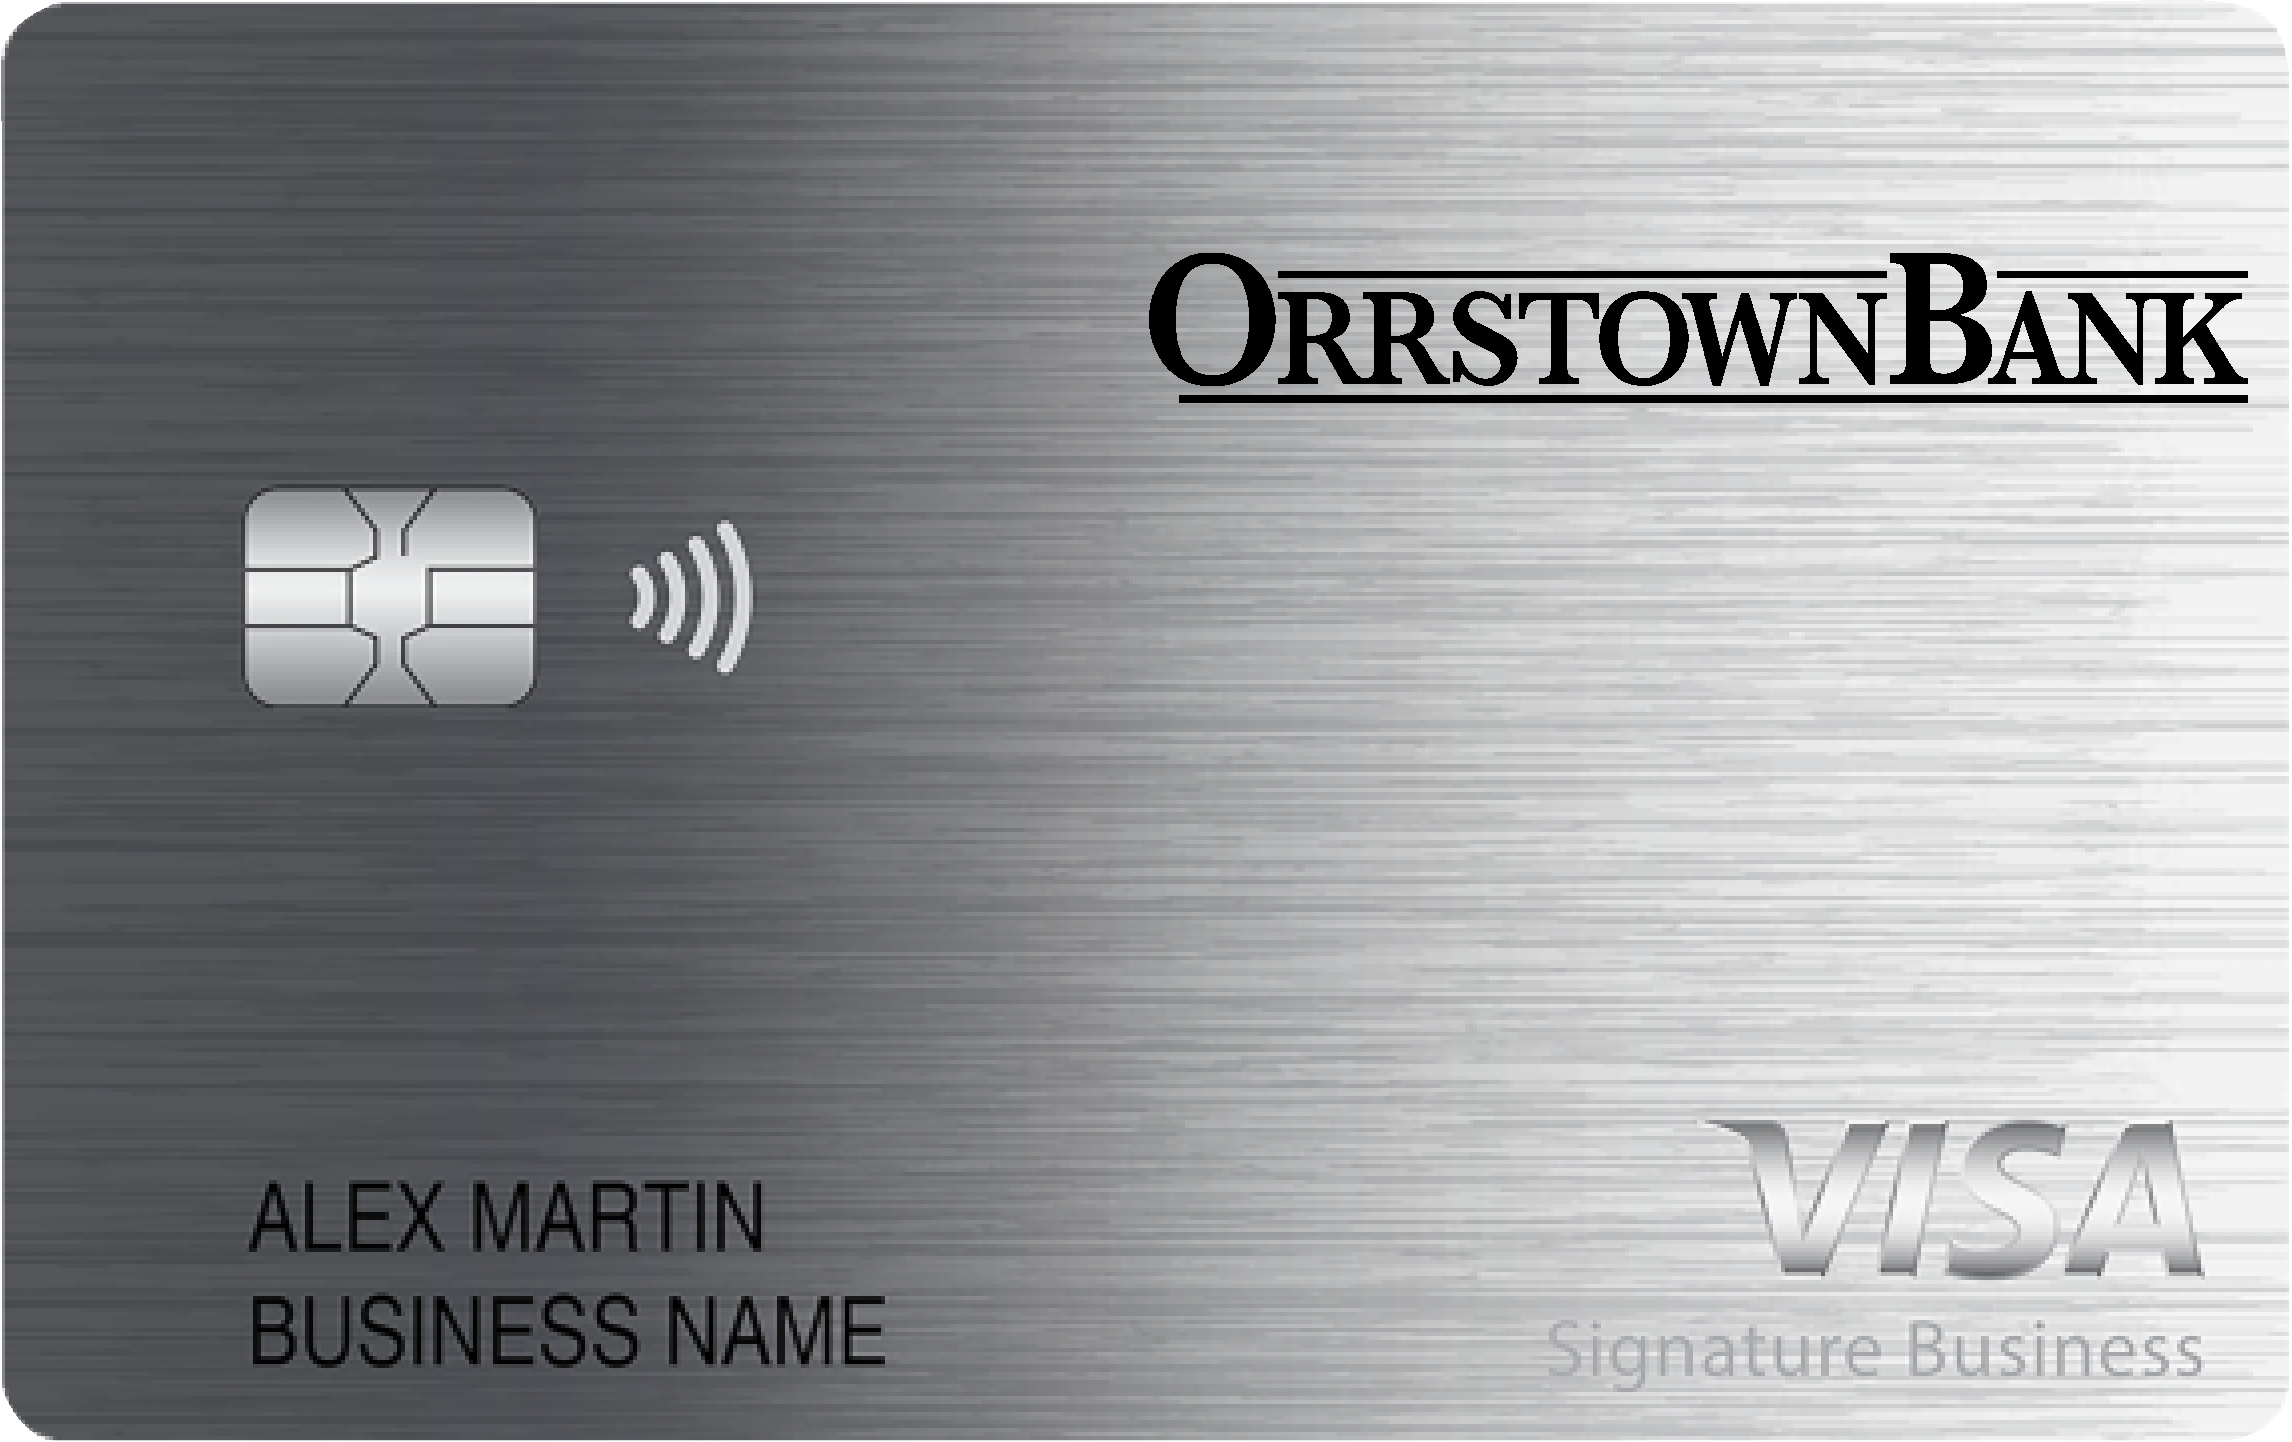 Orrstown Bank Smart Business Rewards Card